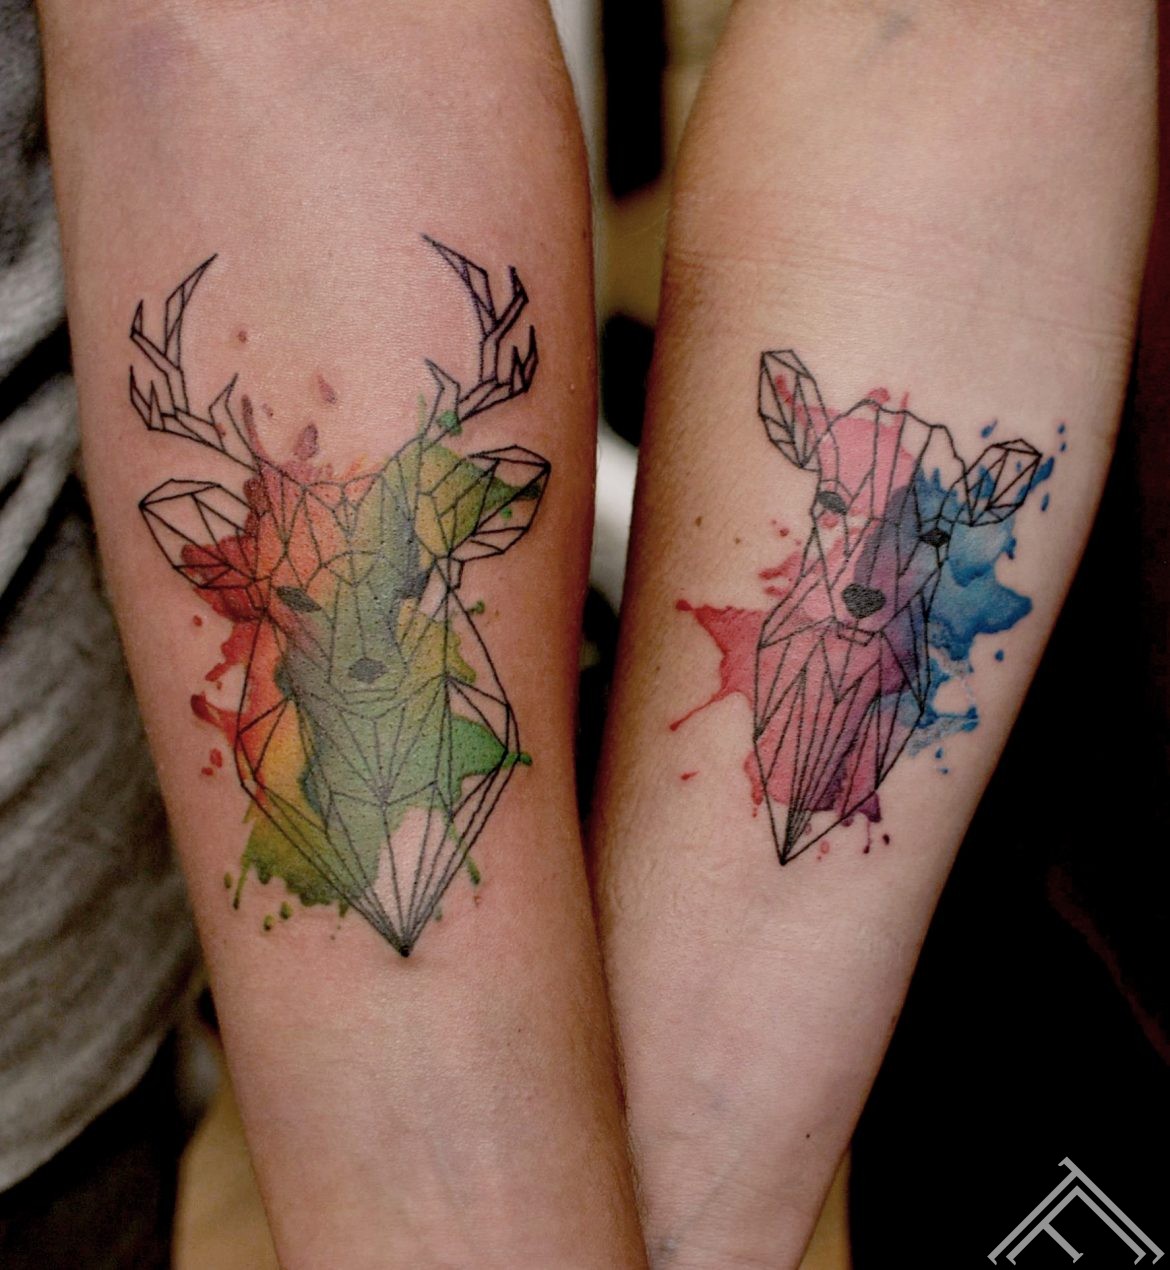 1abstract-sketch-watercolor-tattoo-tetovejums-krasains-skice-udenskrasa-riga-tattoofrequency-janisandersons